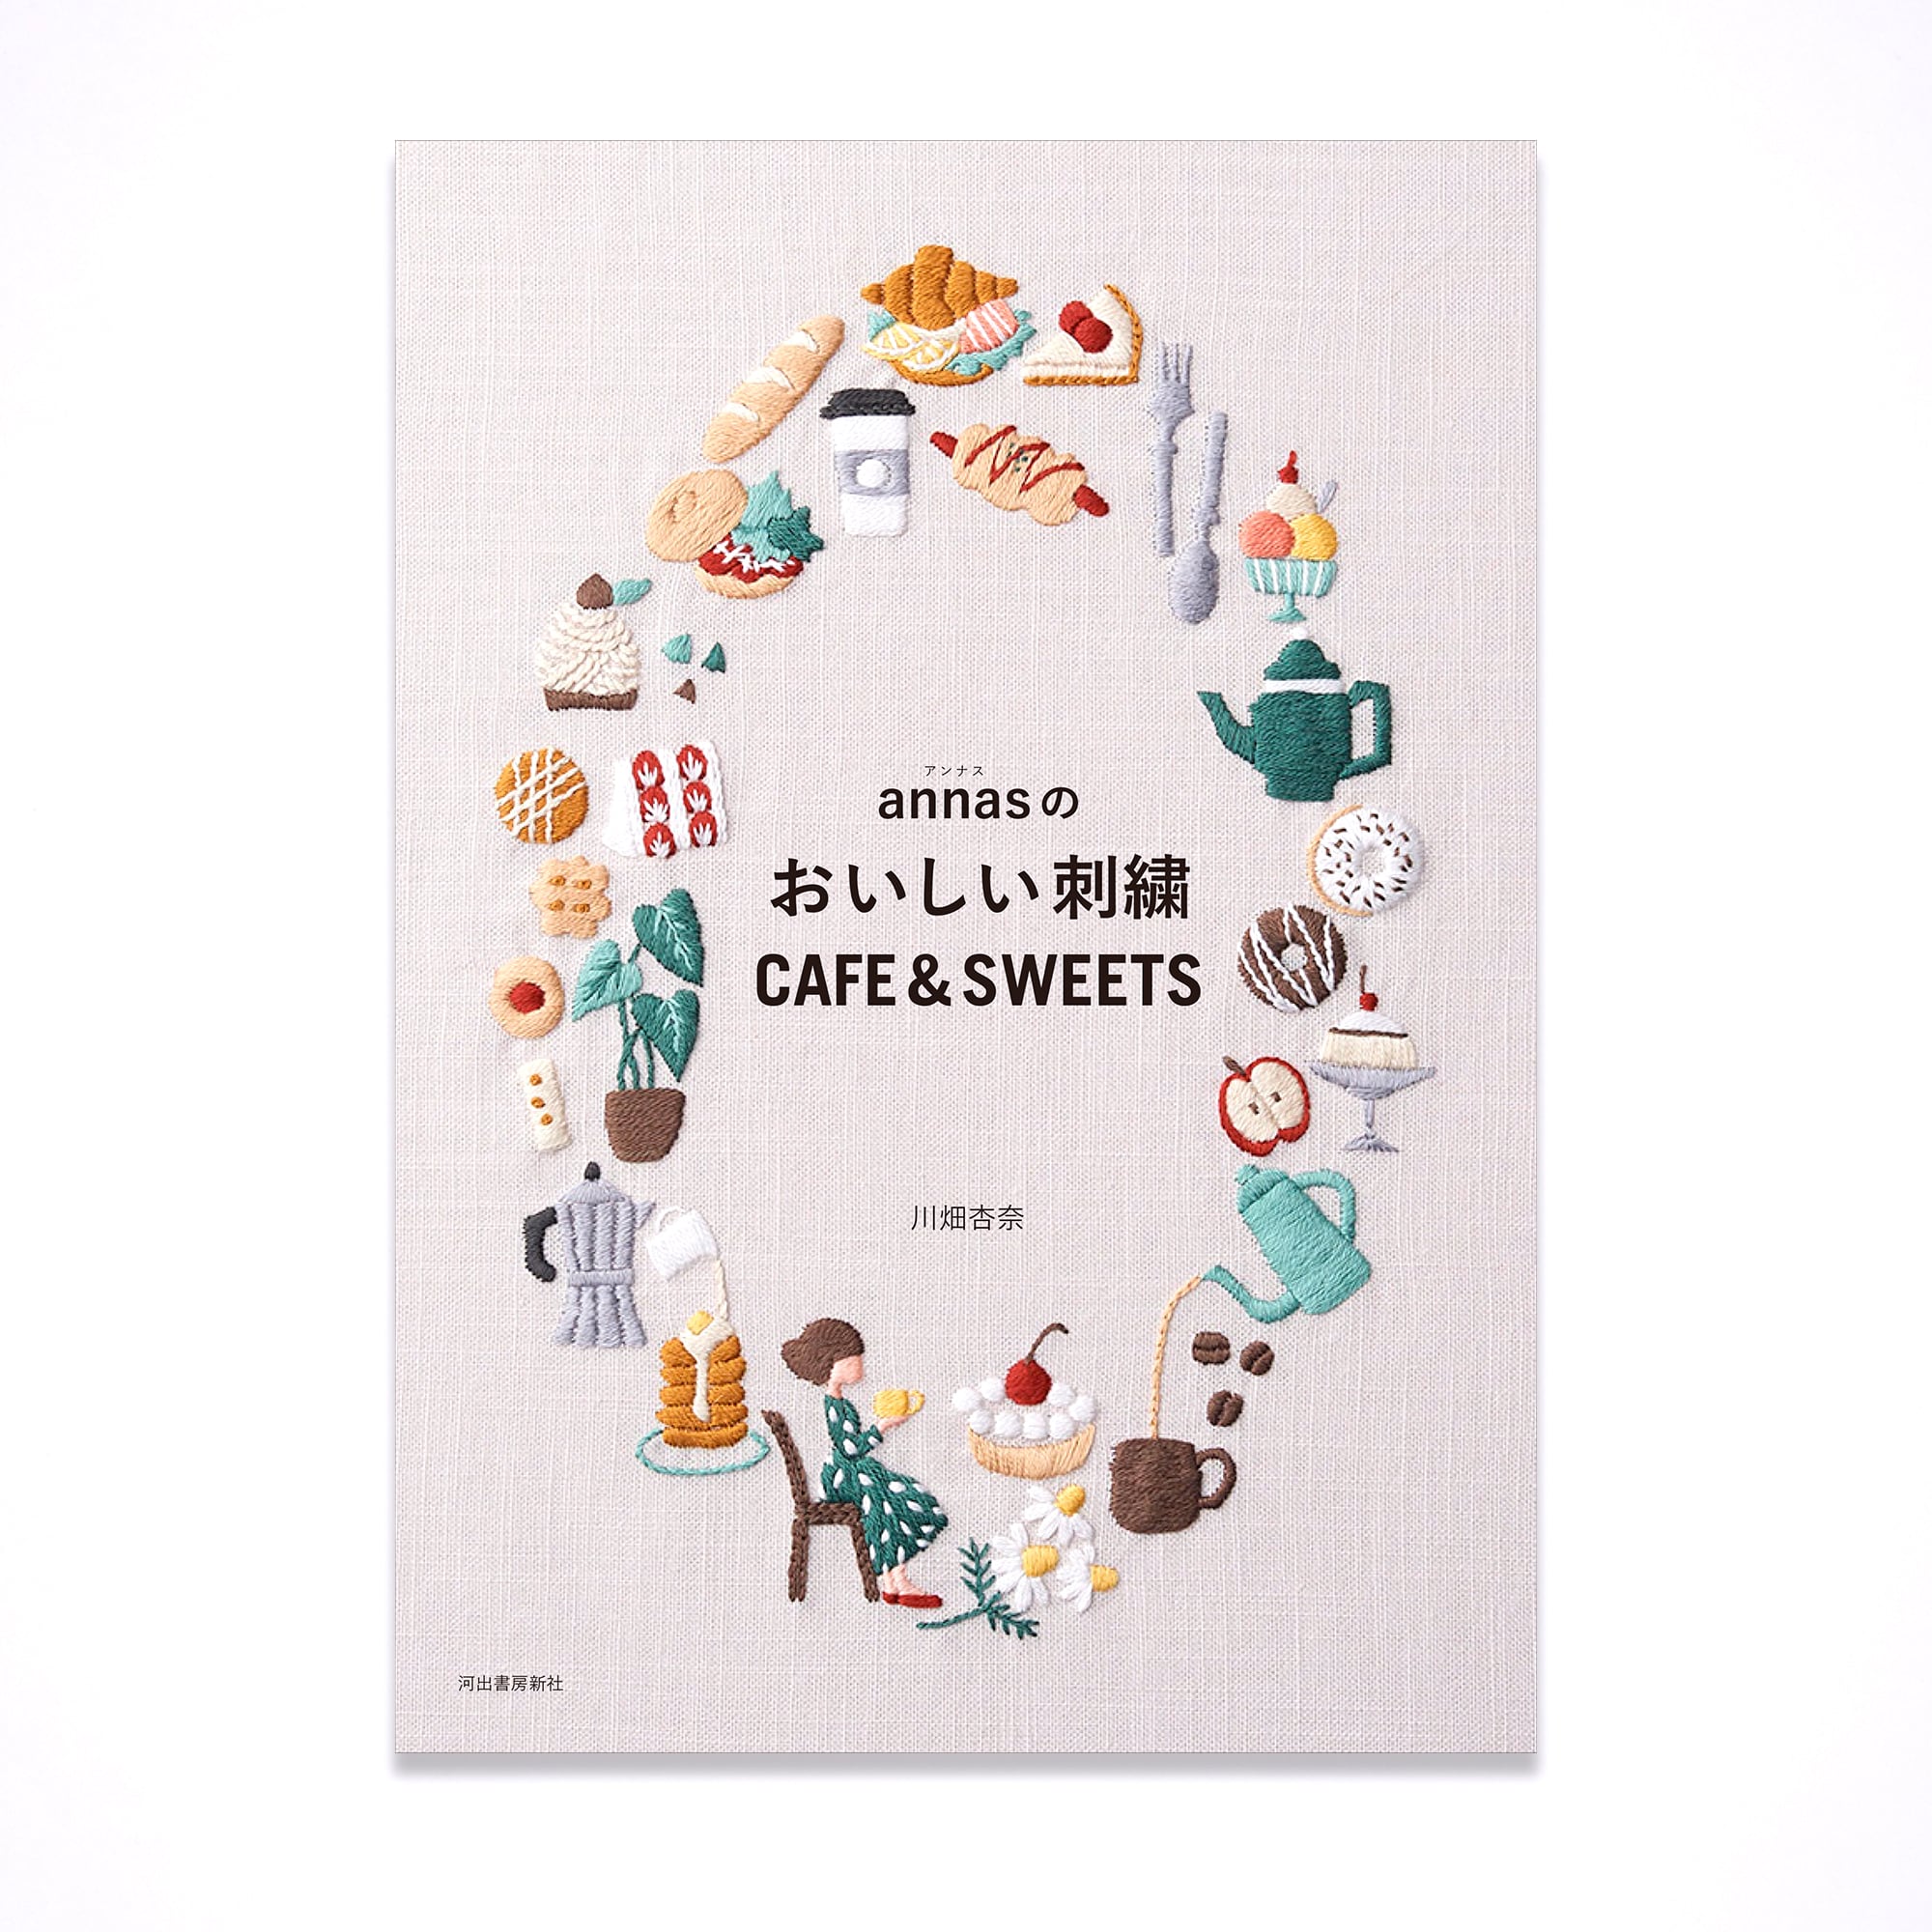 annasのおいしい刺繍 CAFE＆SWEETS【サイン付き】 Net store アンナとラパン